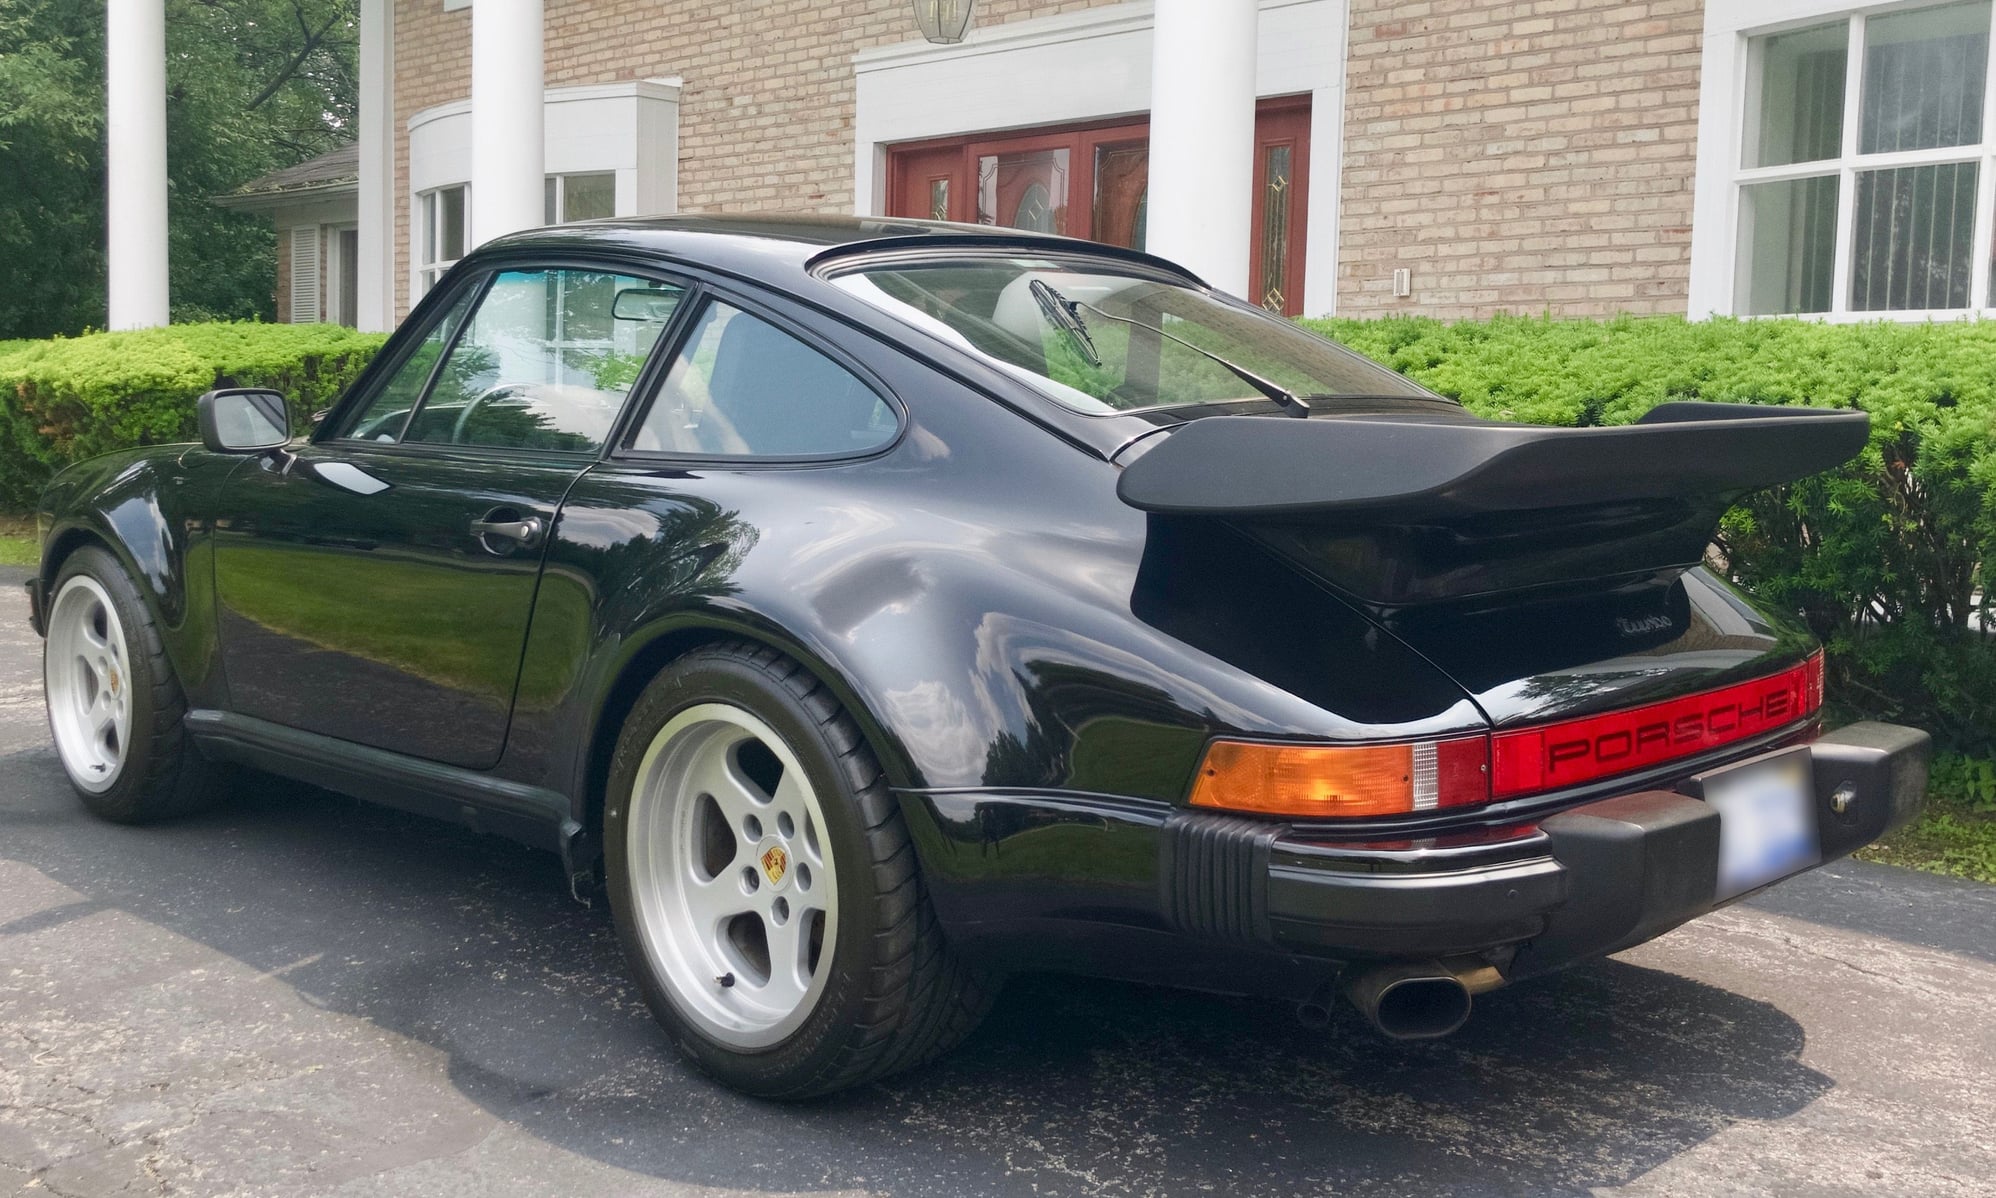 1984 Porsche 911 - 1984 Porsche M941 Turbo Look w/ 3.3L Turbo Engine - Used - VIN WP0AB0919ES121468 - 58,204 Miles - 2WD - Manual - Coupe - Black - Metro Detroit, MI 48076, United States